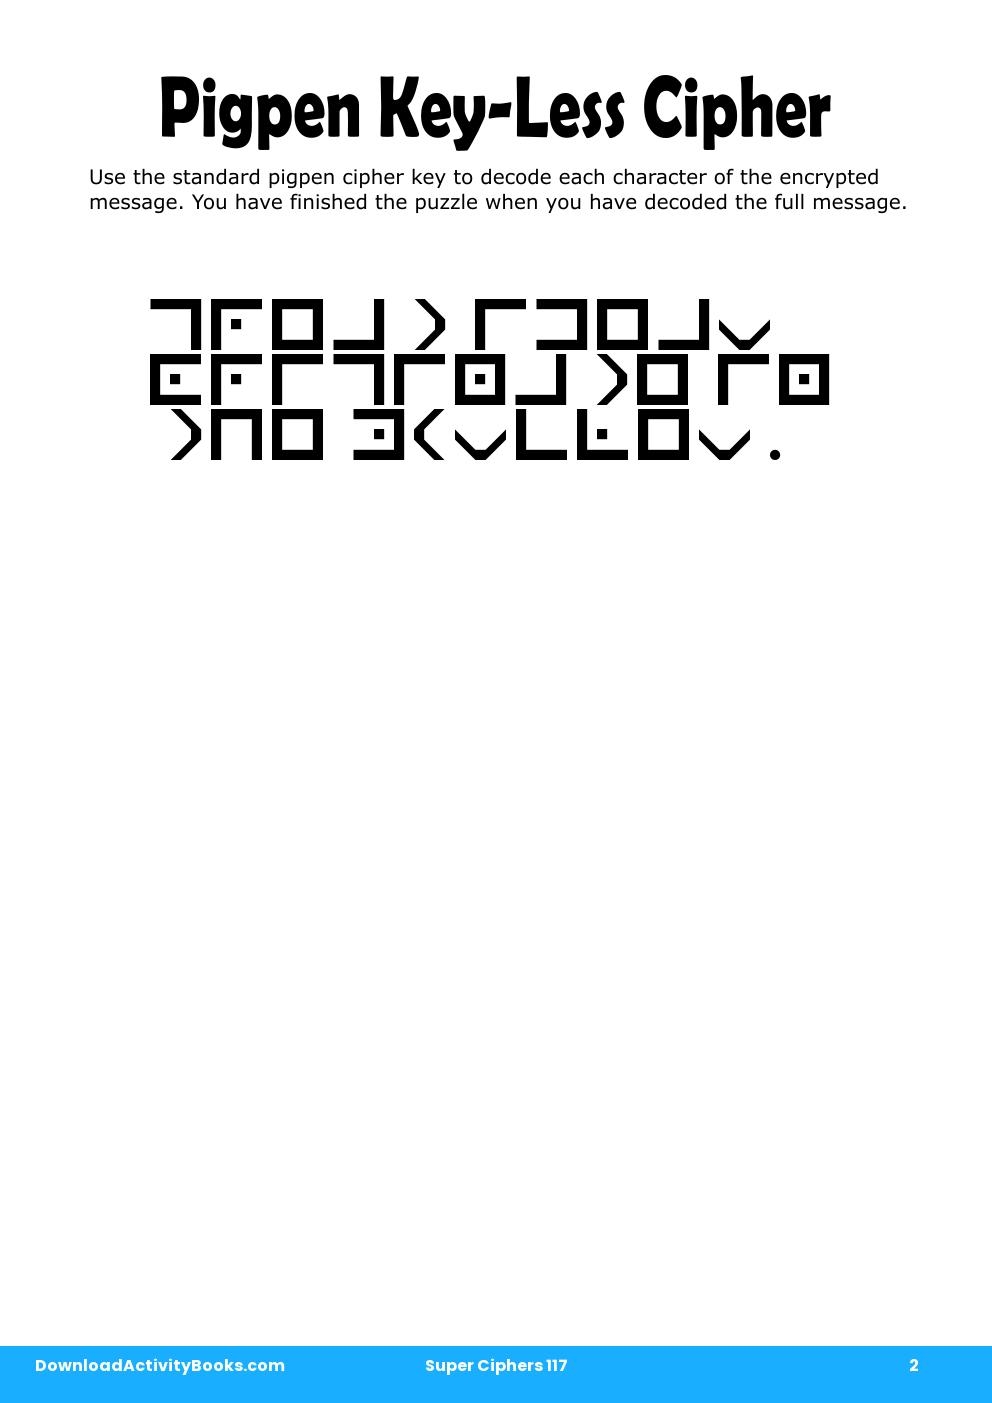 Pigpen Cipher in Super Ciphers 117